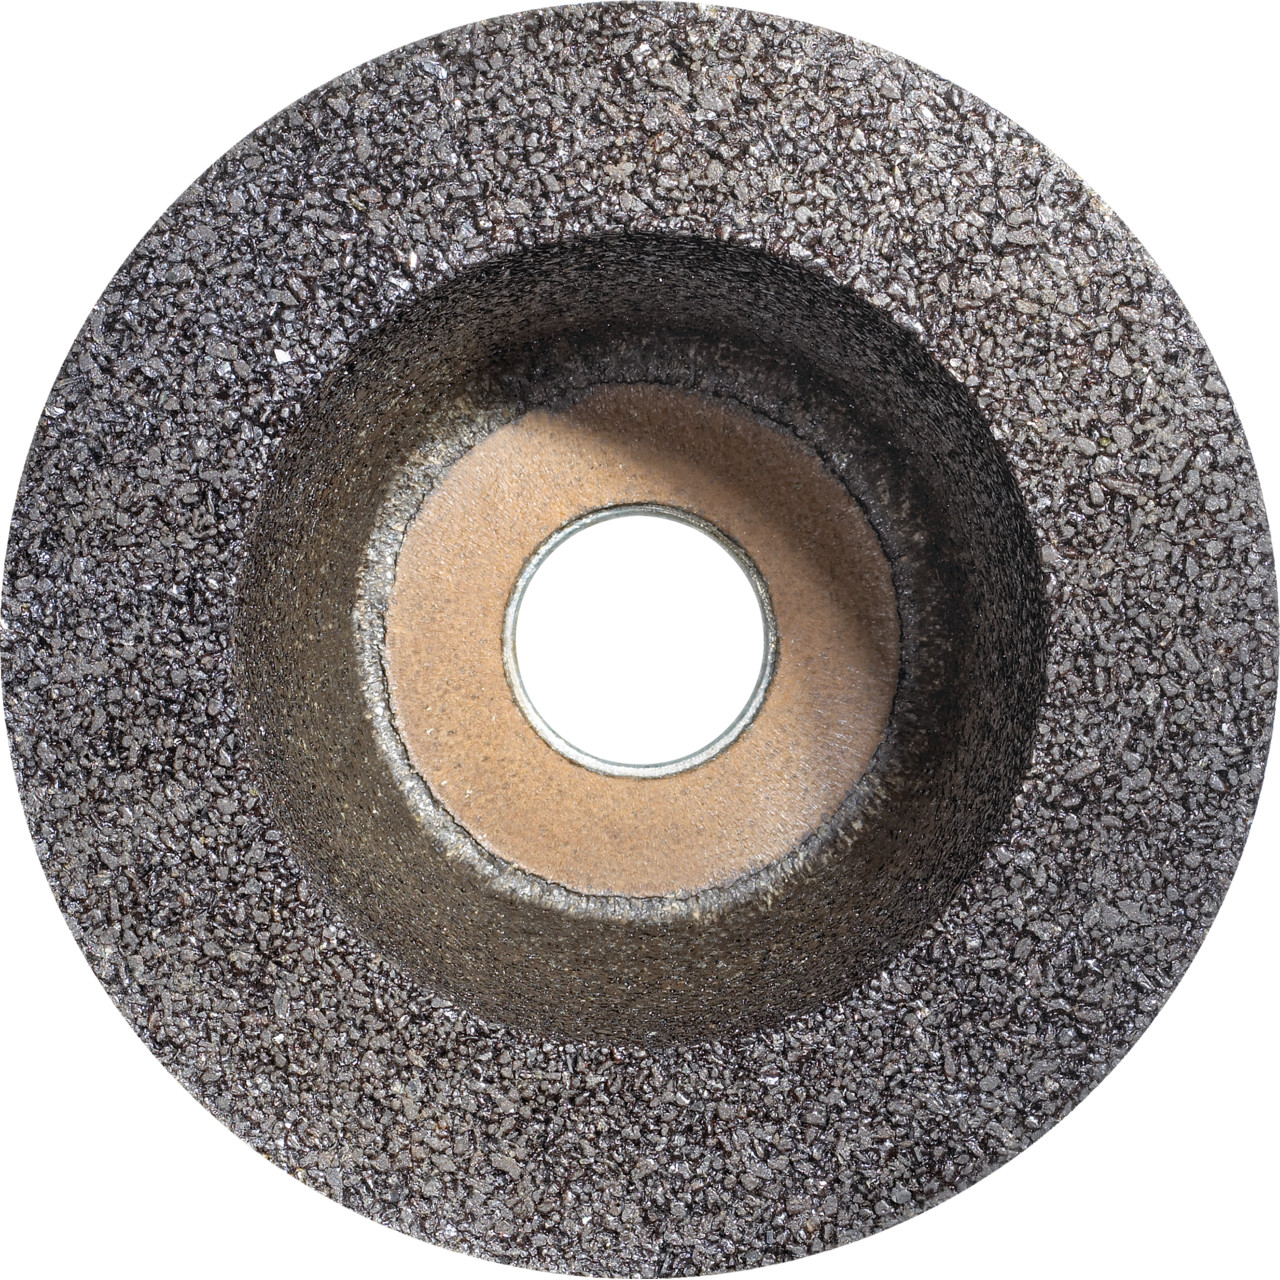 TYROLIT Tazza in resina sintetica DxTxGE 100x45xM14 Per pietra, forma: 6ZB (tazza di macinazione), Art. 56895